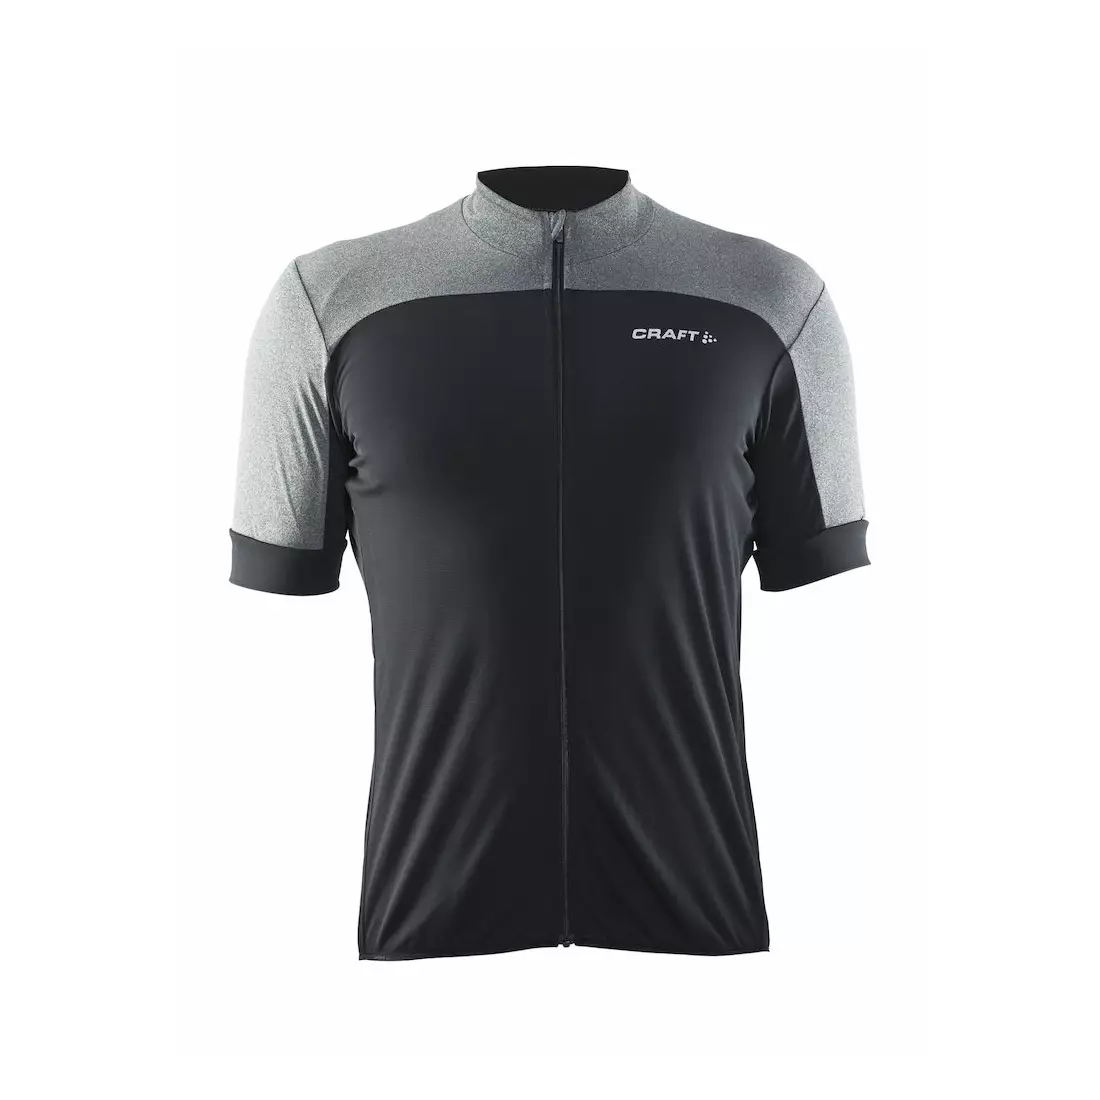 CRAFT Balance 1905007-9975 - men's cycling jersey